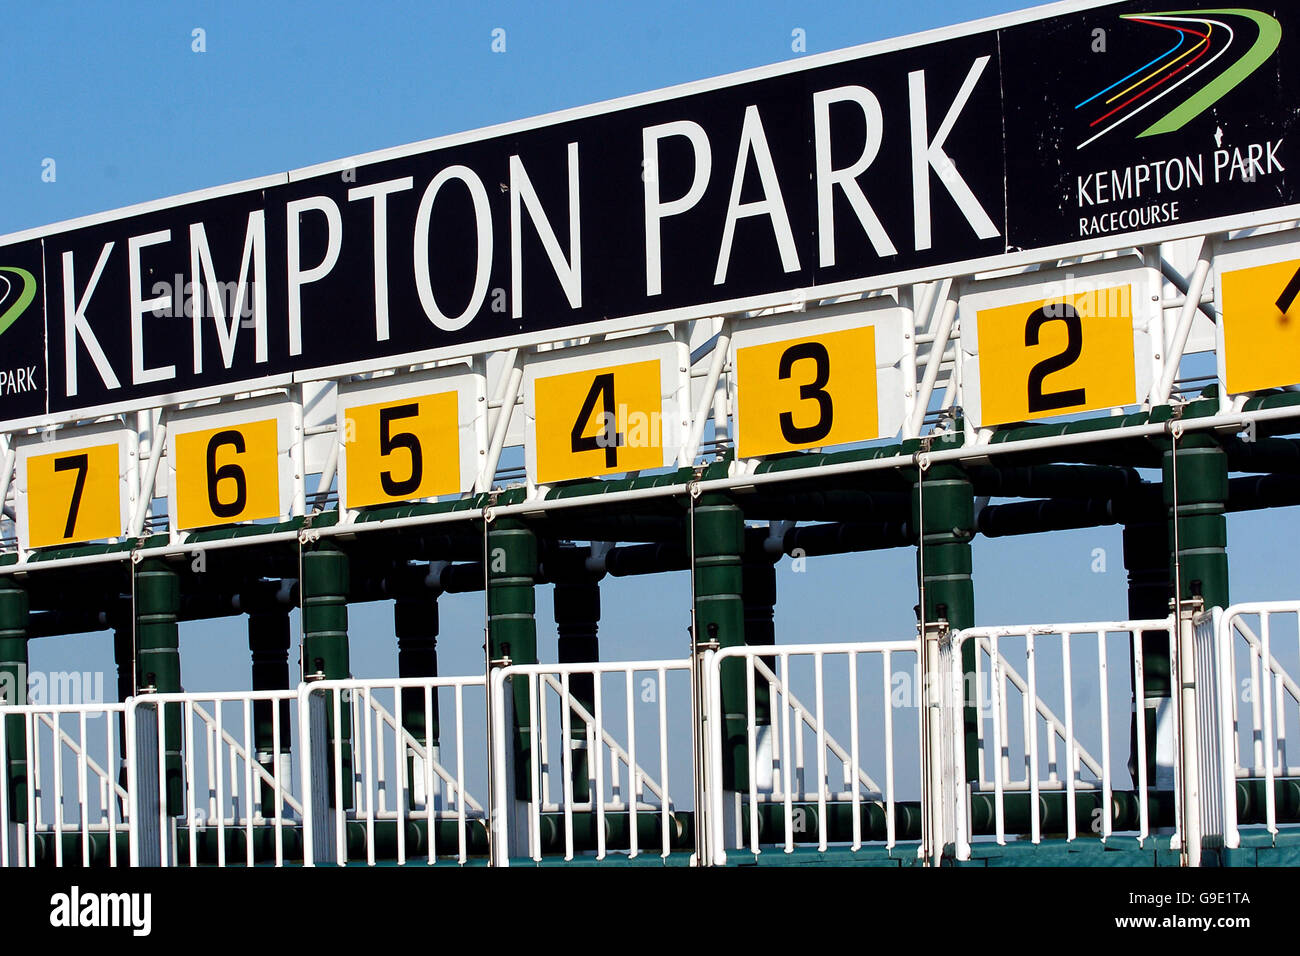 Horse Racing - Best of British Evening - Kempton Park Racecourse. The starting gate at Kempton Park Stock Photo